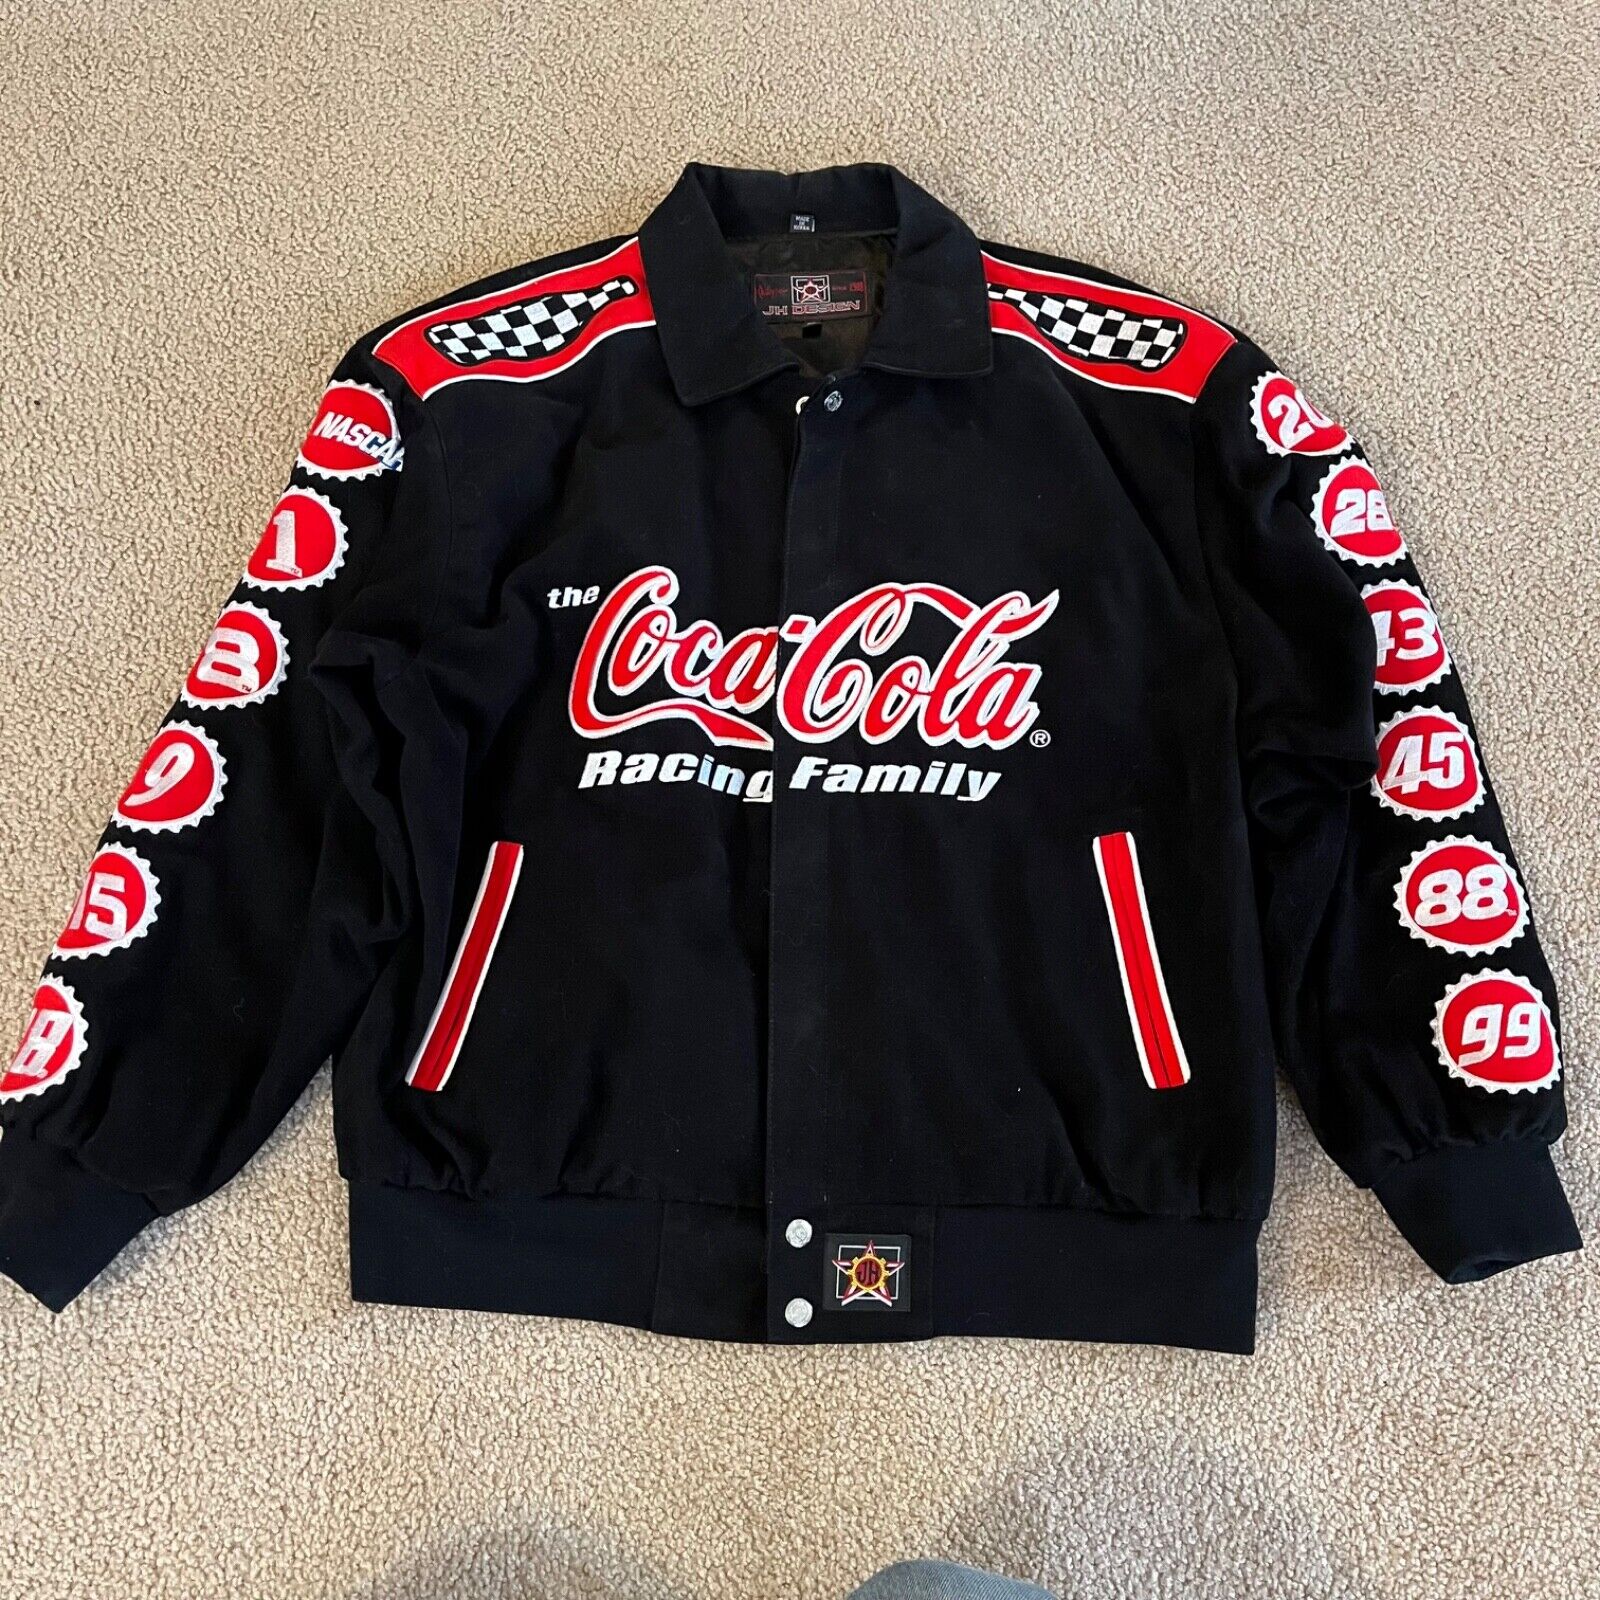 NASCAR JH Design Coca Cola Racing Family 2001 - 2002 Jacket Size XL Black